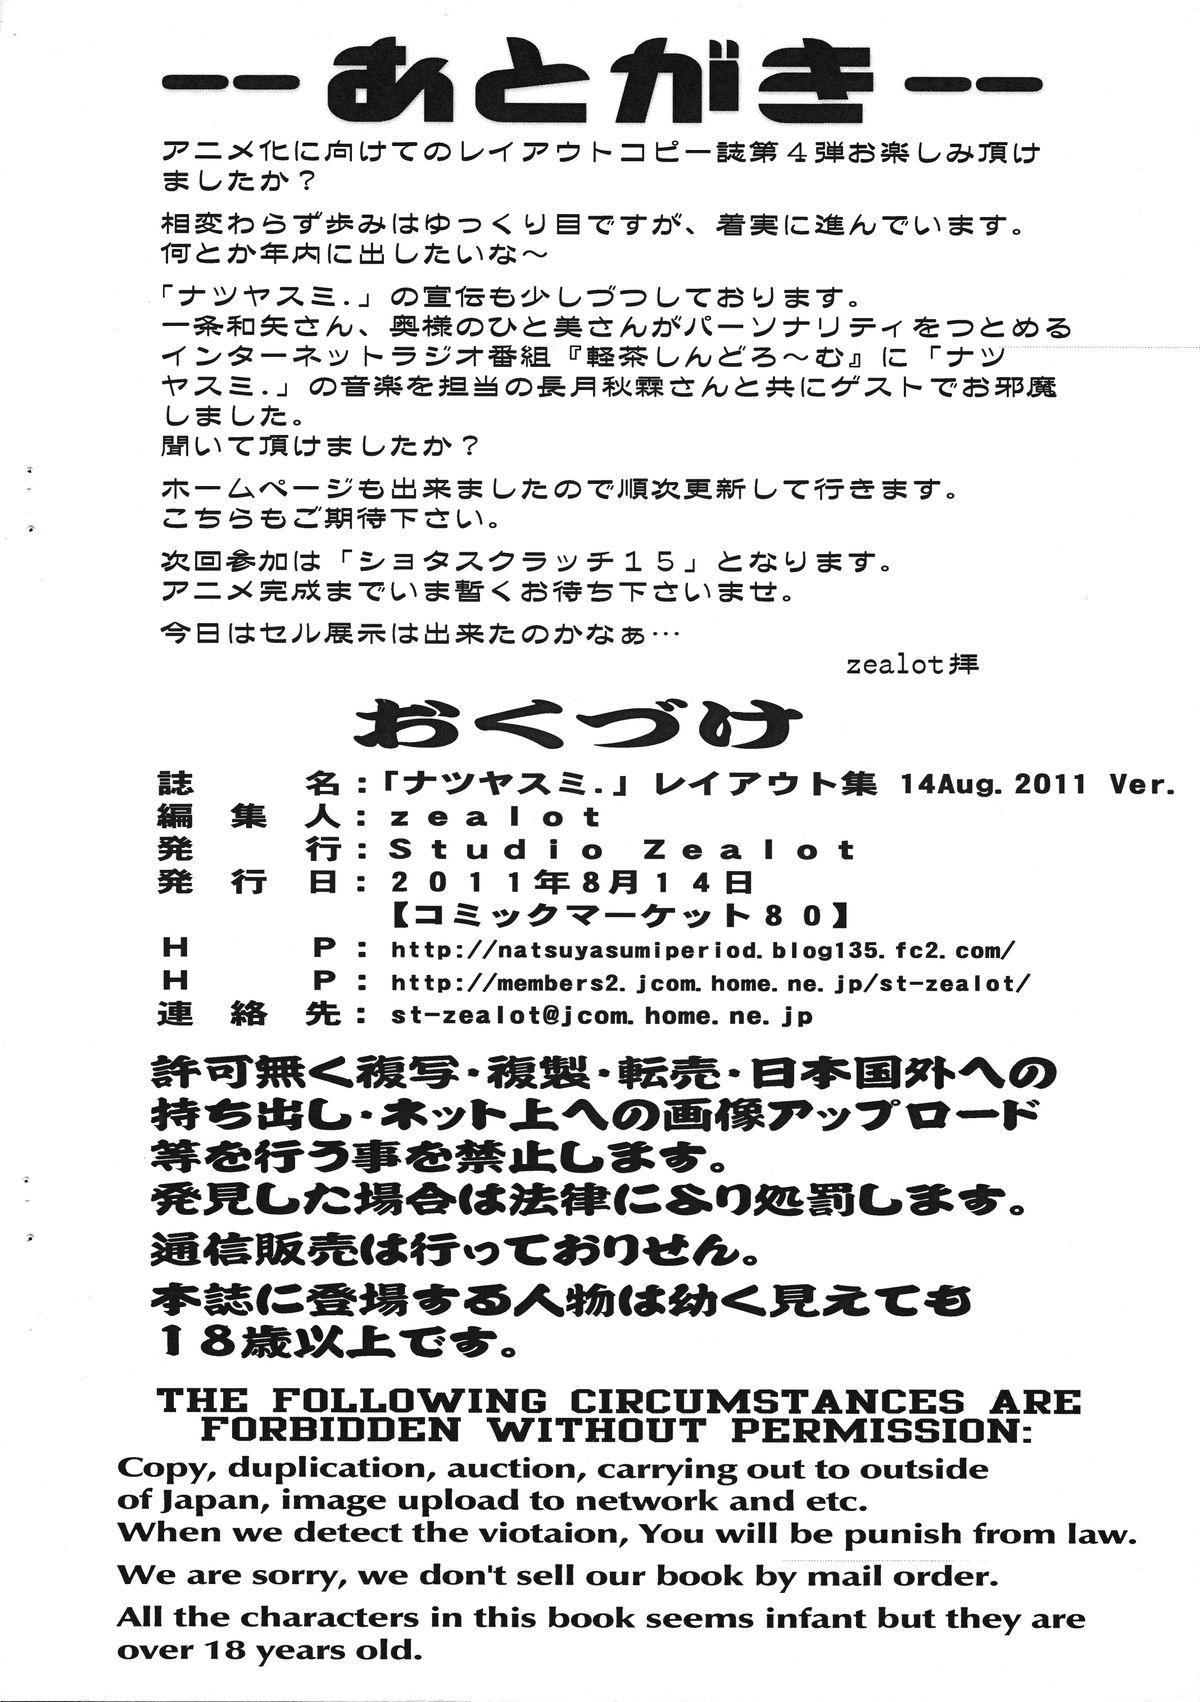 Snatch Natsuyasumi Period Layout Shuu 14 Aug. 2011 Ver. Lesbian Sex - Page 11